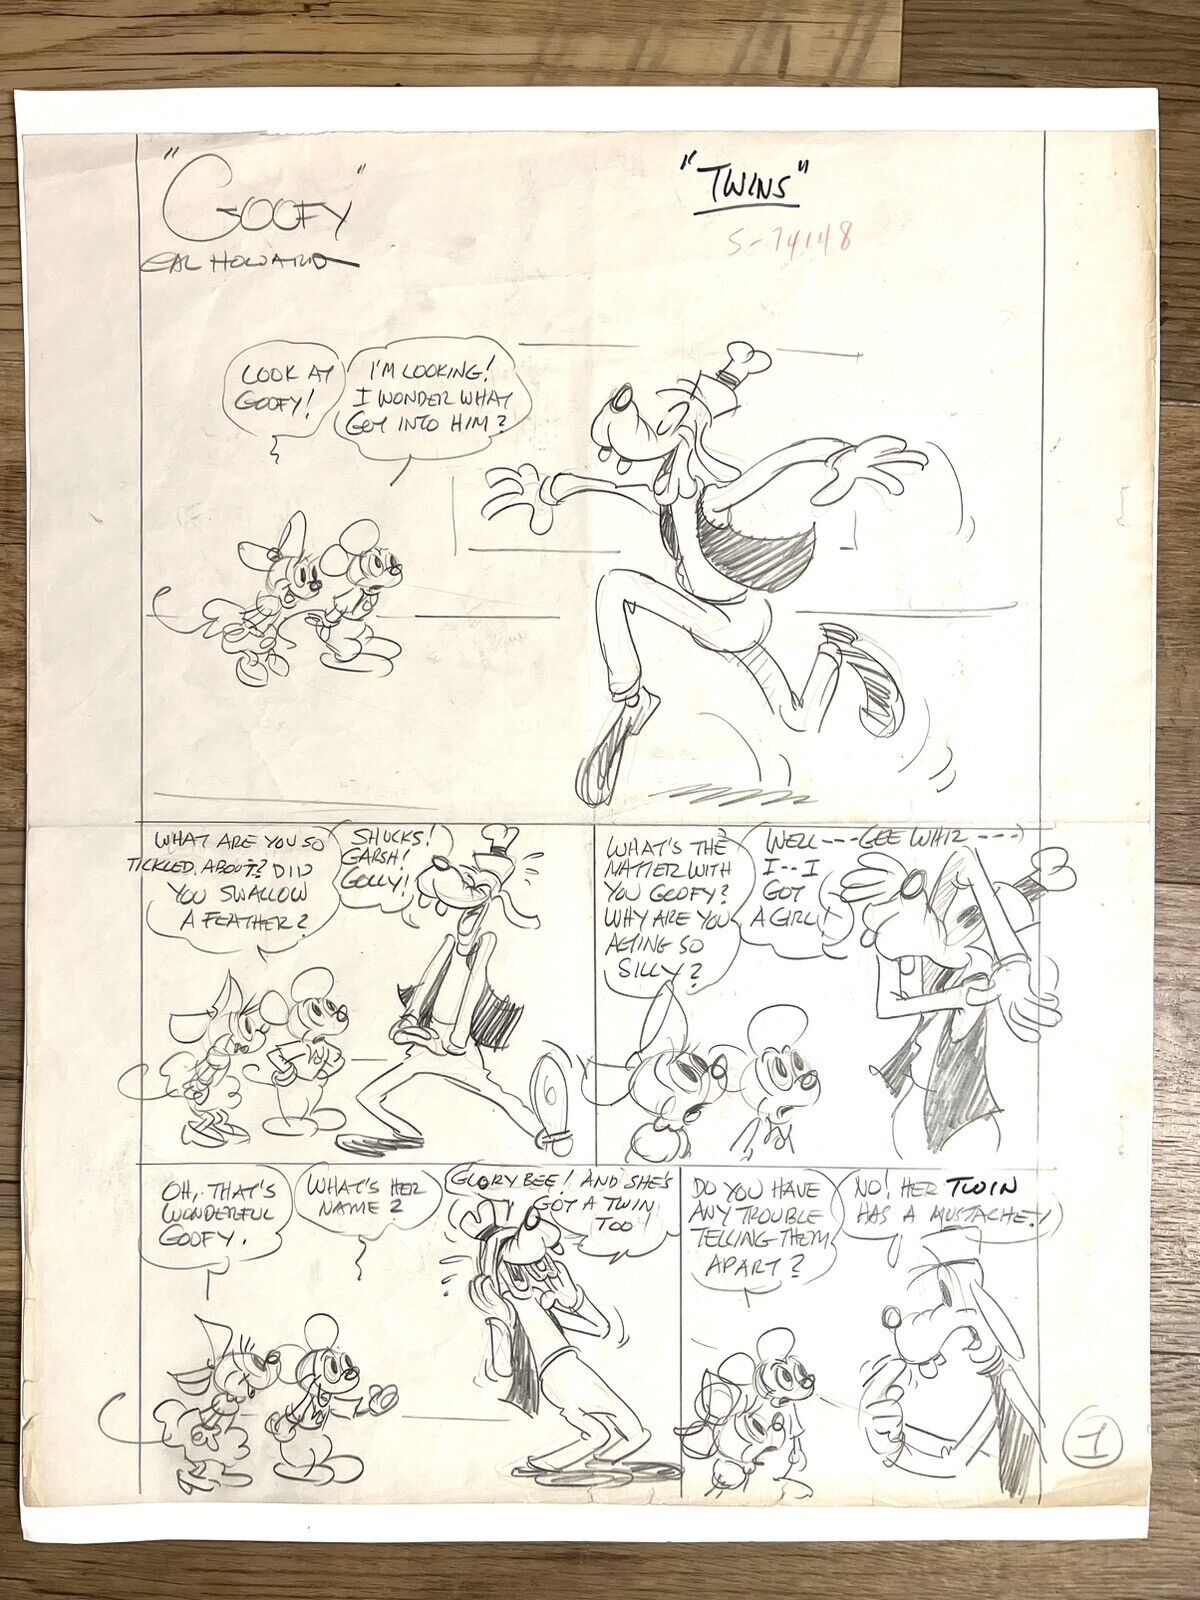 Disney Comic Proof Sketch Original Signed Cal Howard Goofy “Twins”